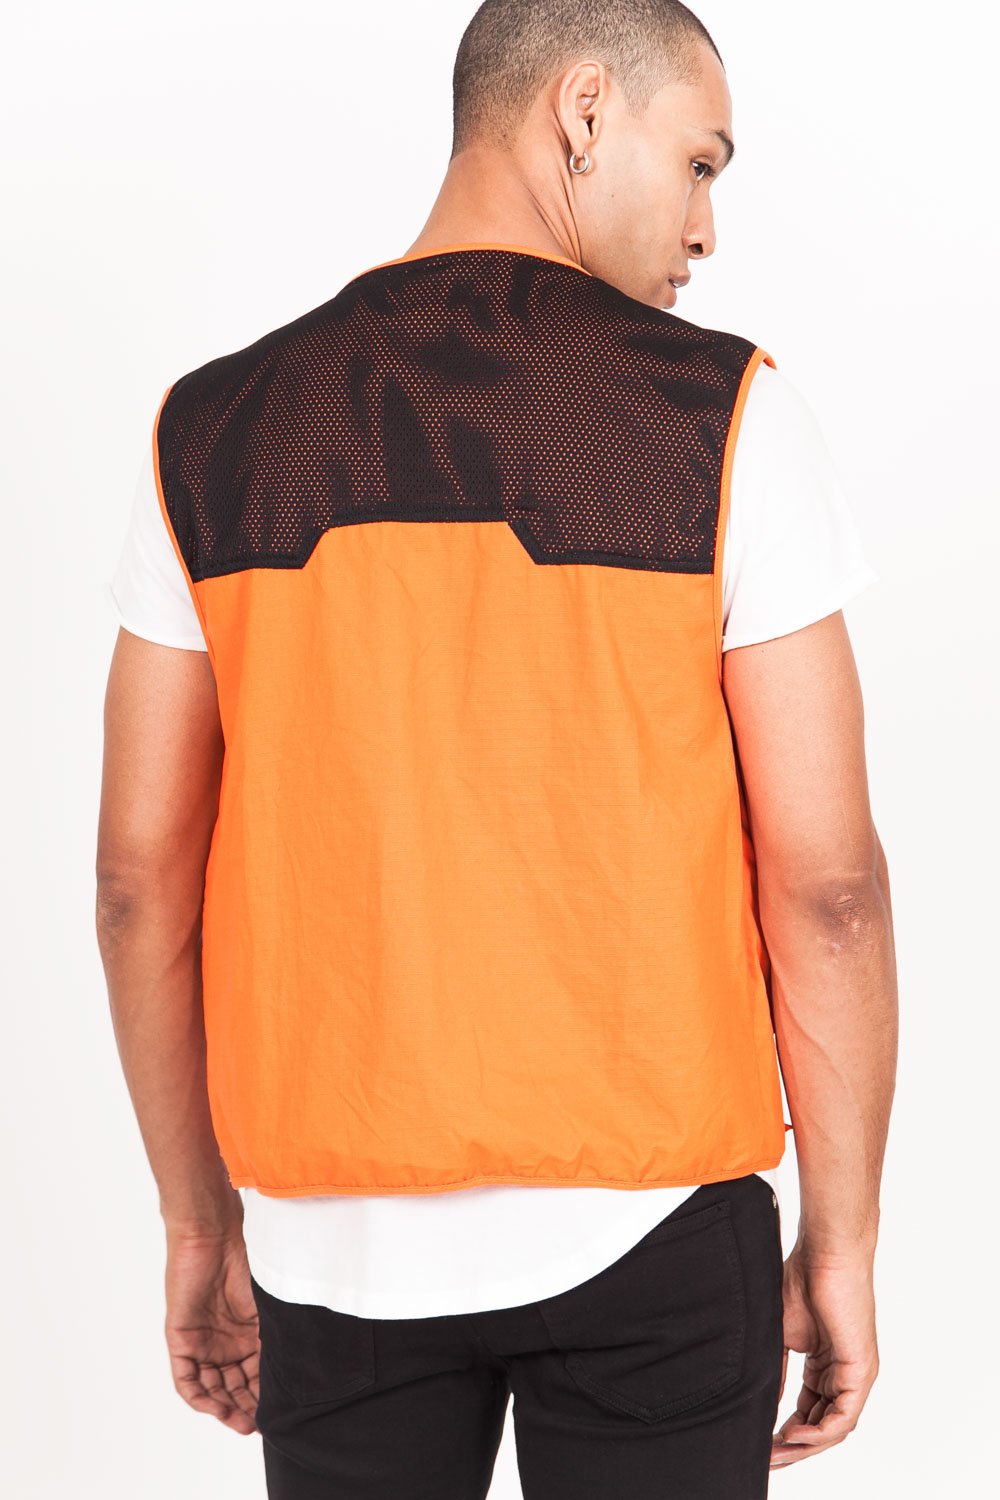 Sleeveless Multiple Pockets Vest Orange